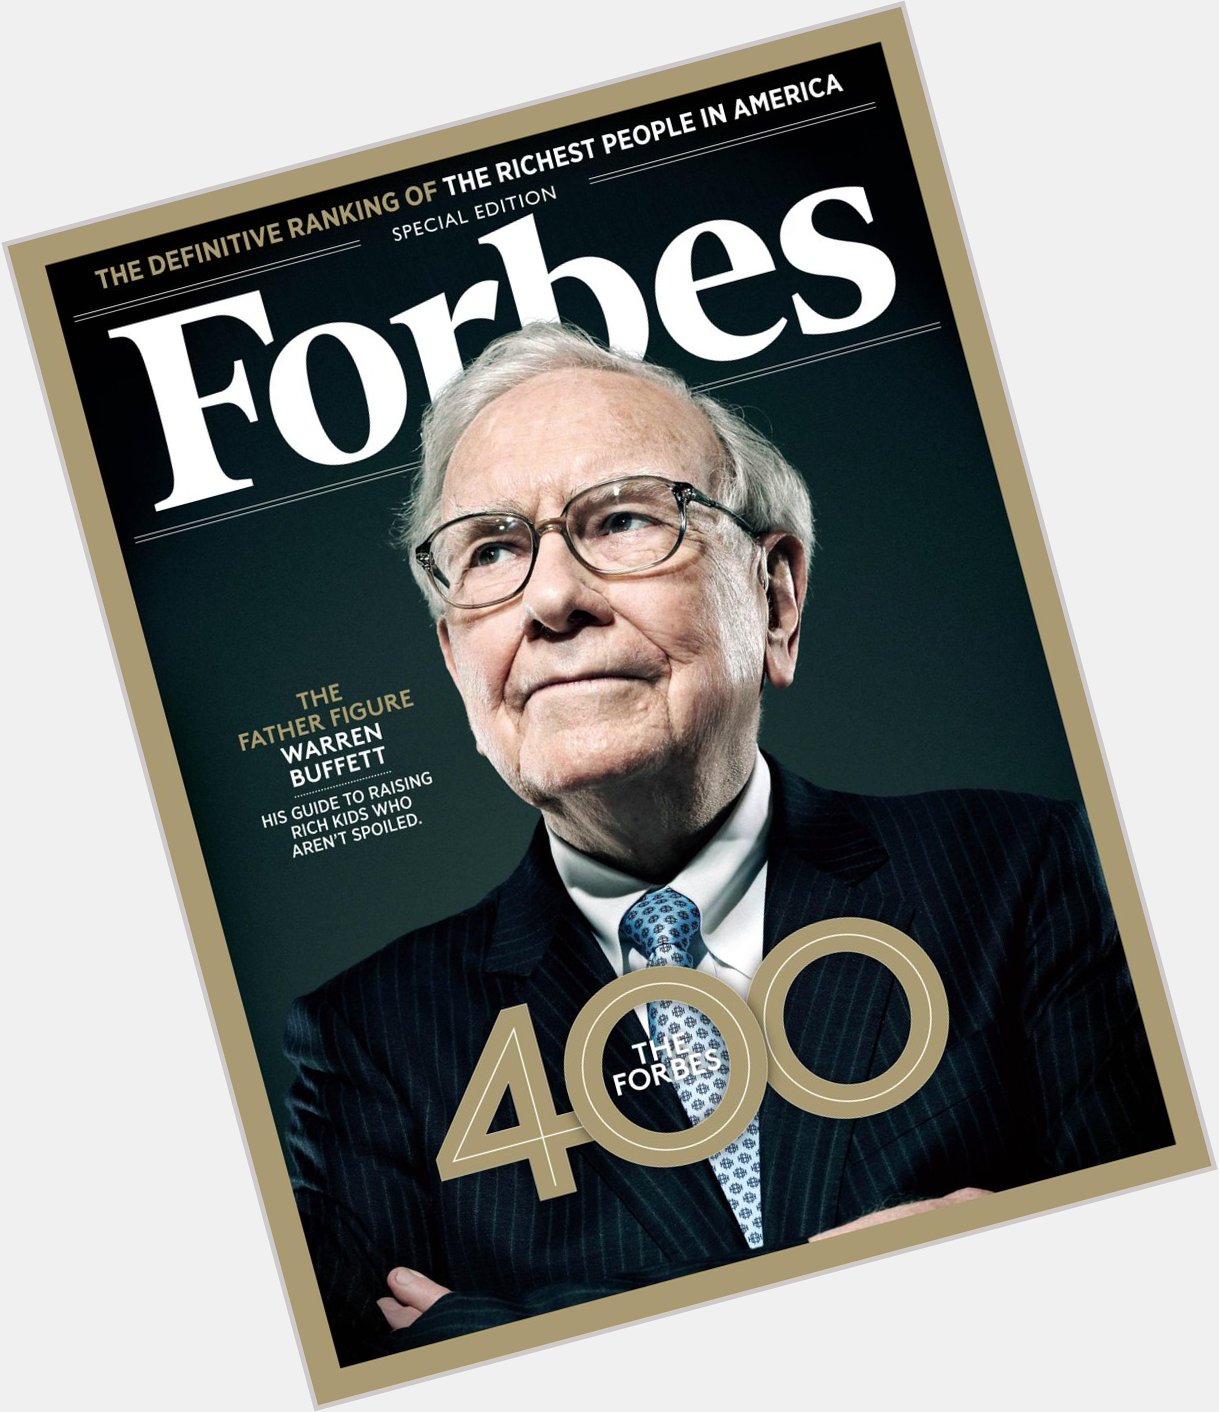 Happy Birthday to Warren Buffett, who turns 85 today! 